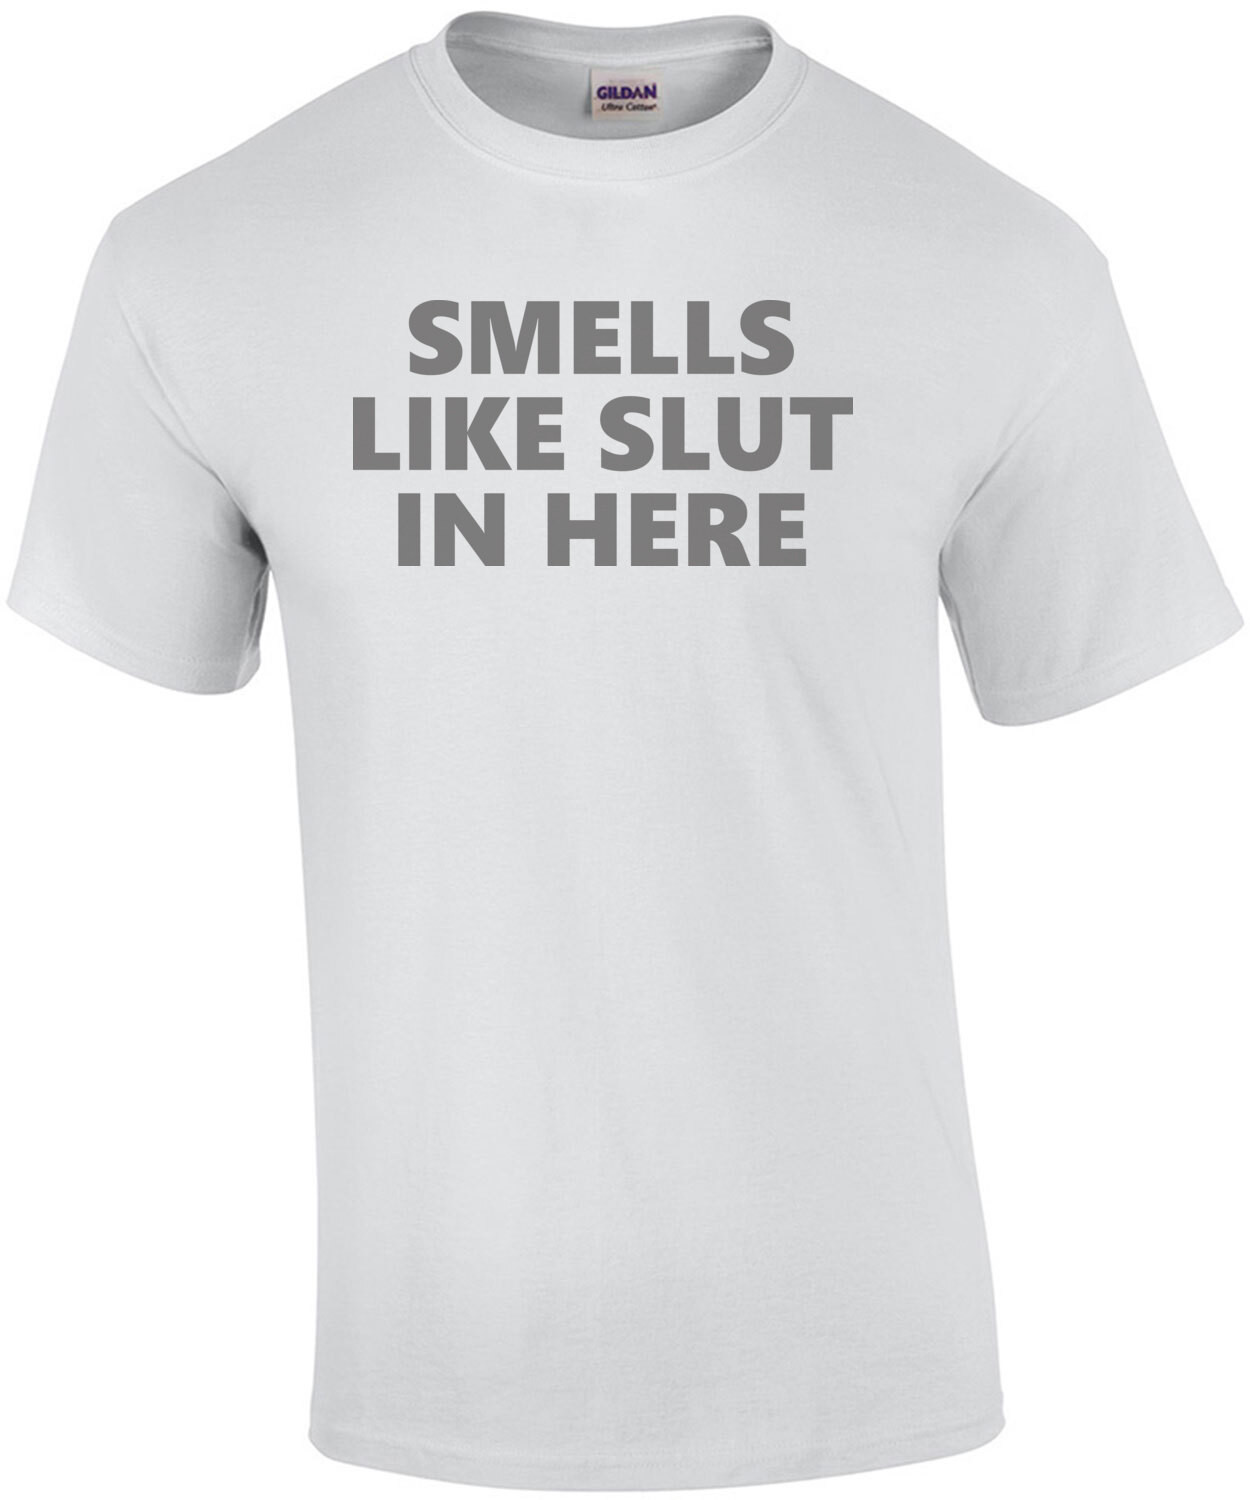 Smells like slut in here - funny t-shirt